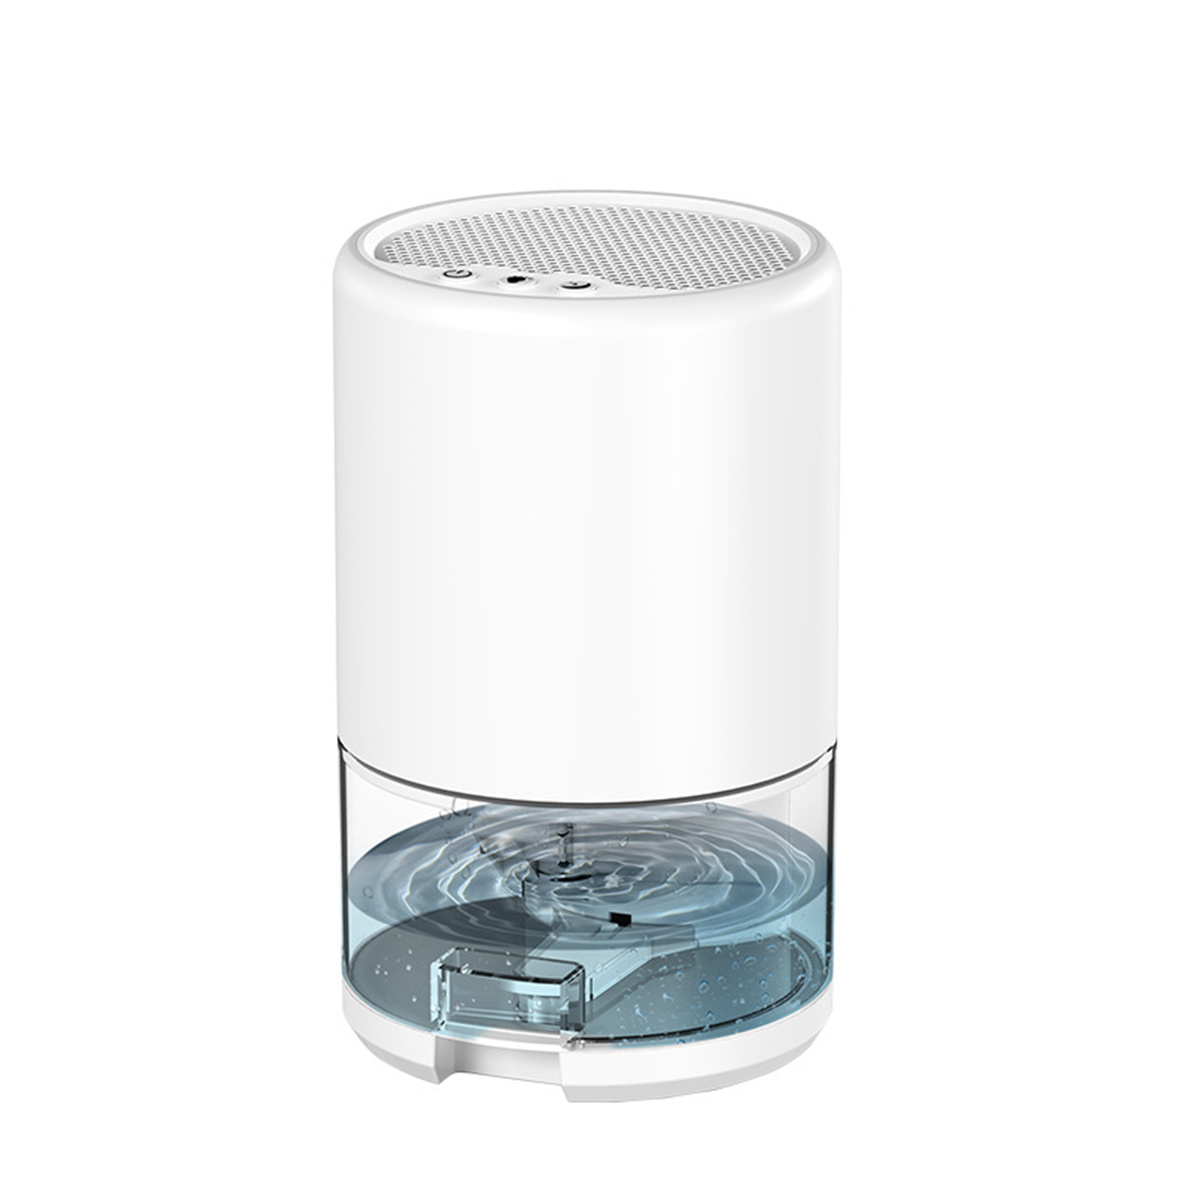 SYNTEK Luftentfeuchter Small Mini m²) Raumgröße: Weiß, 20 Moisture Moisture Proofing Absorber Silent Luftentfeuchter